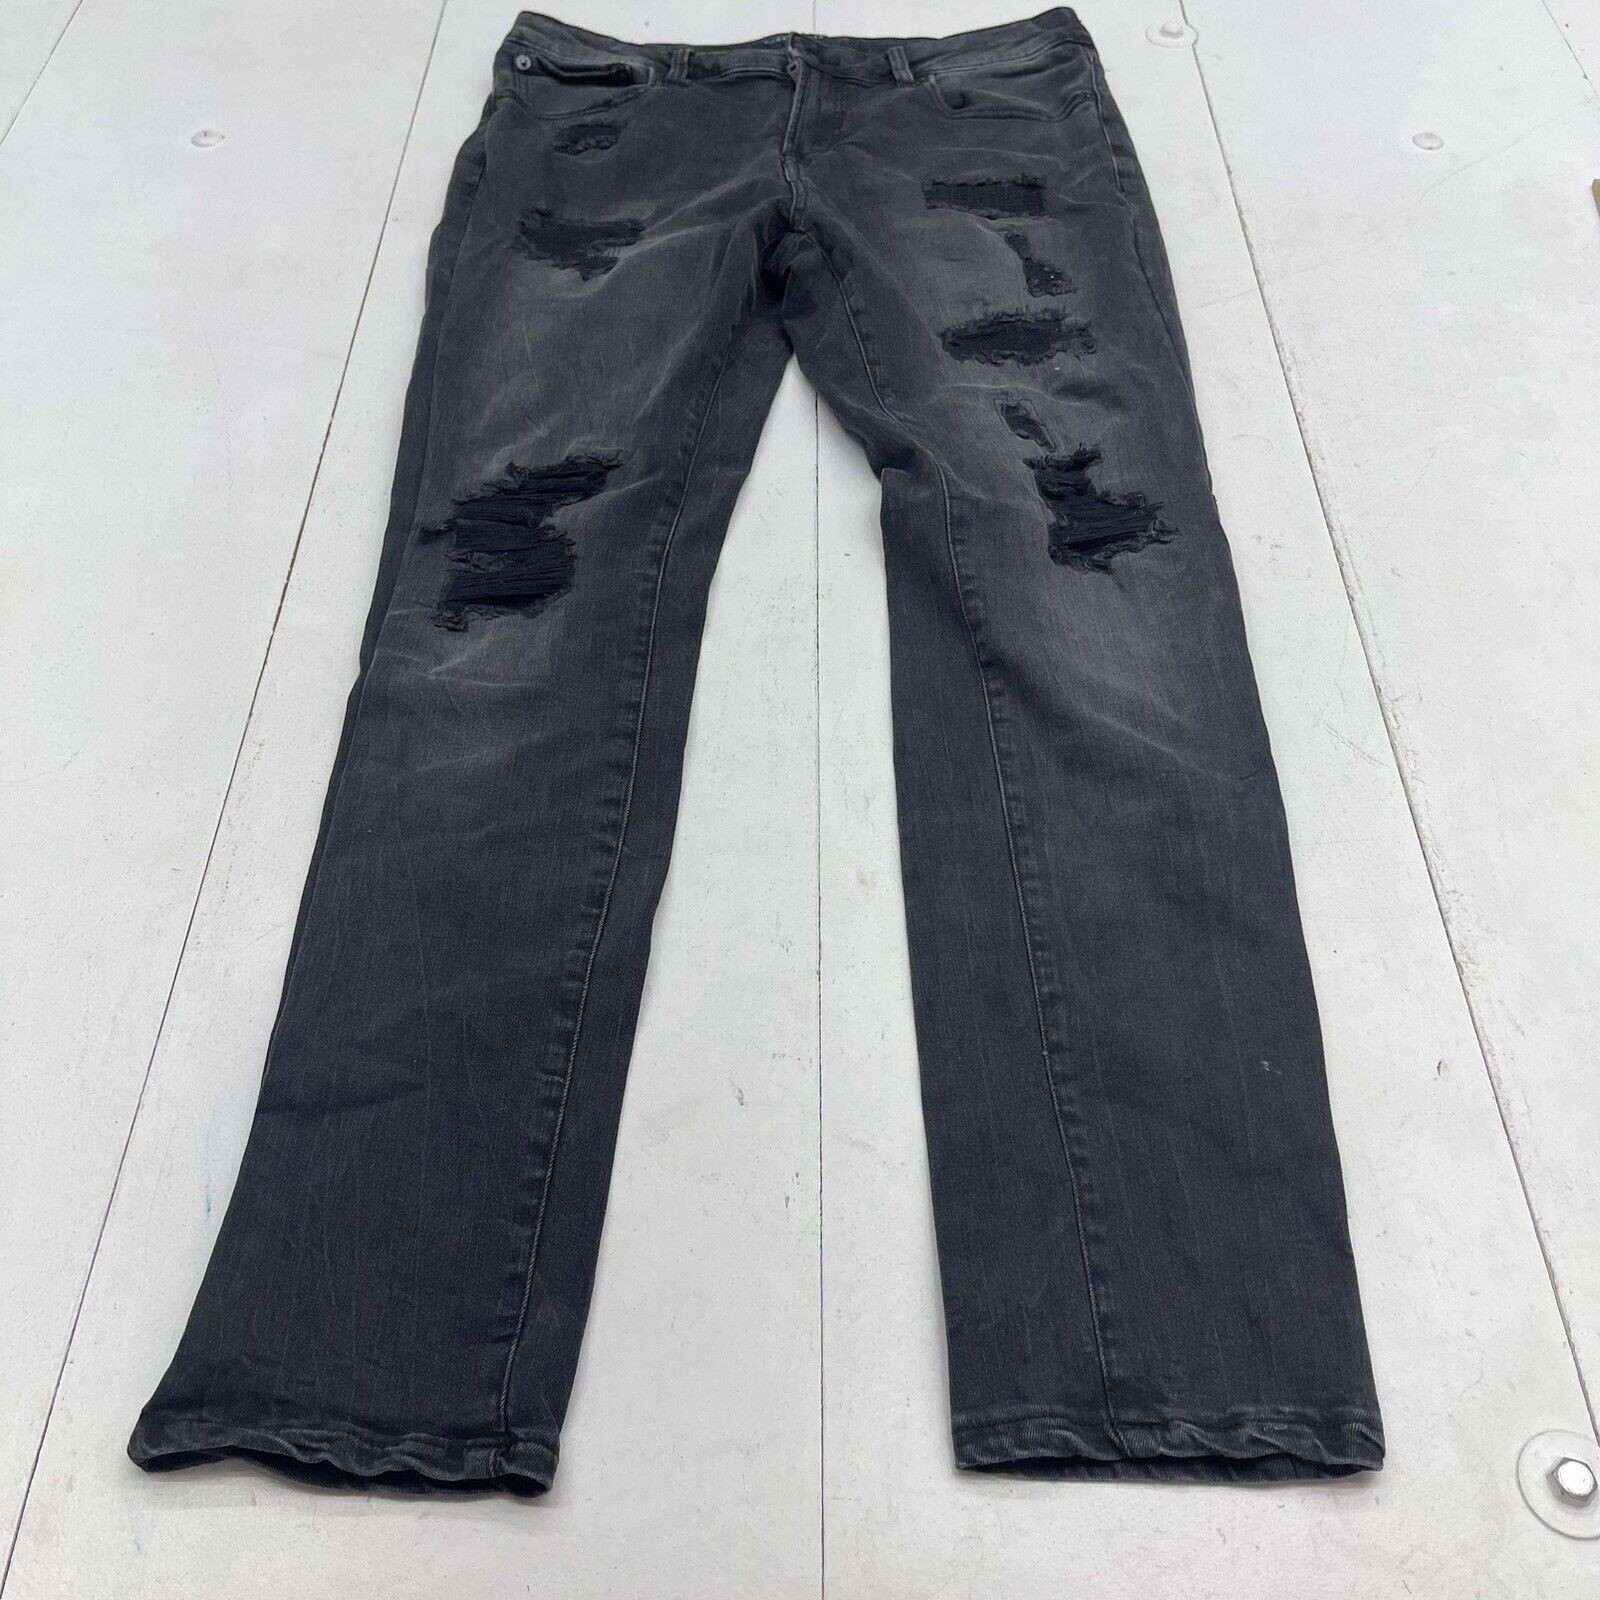 Aeropostale Black Distressed Patch Denim Skinny Jeans Mens Size 34x32 -  beyond exchange